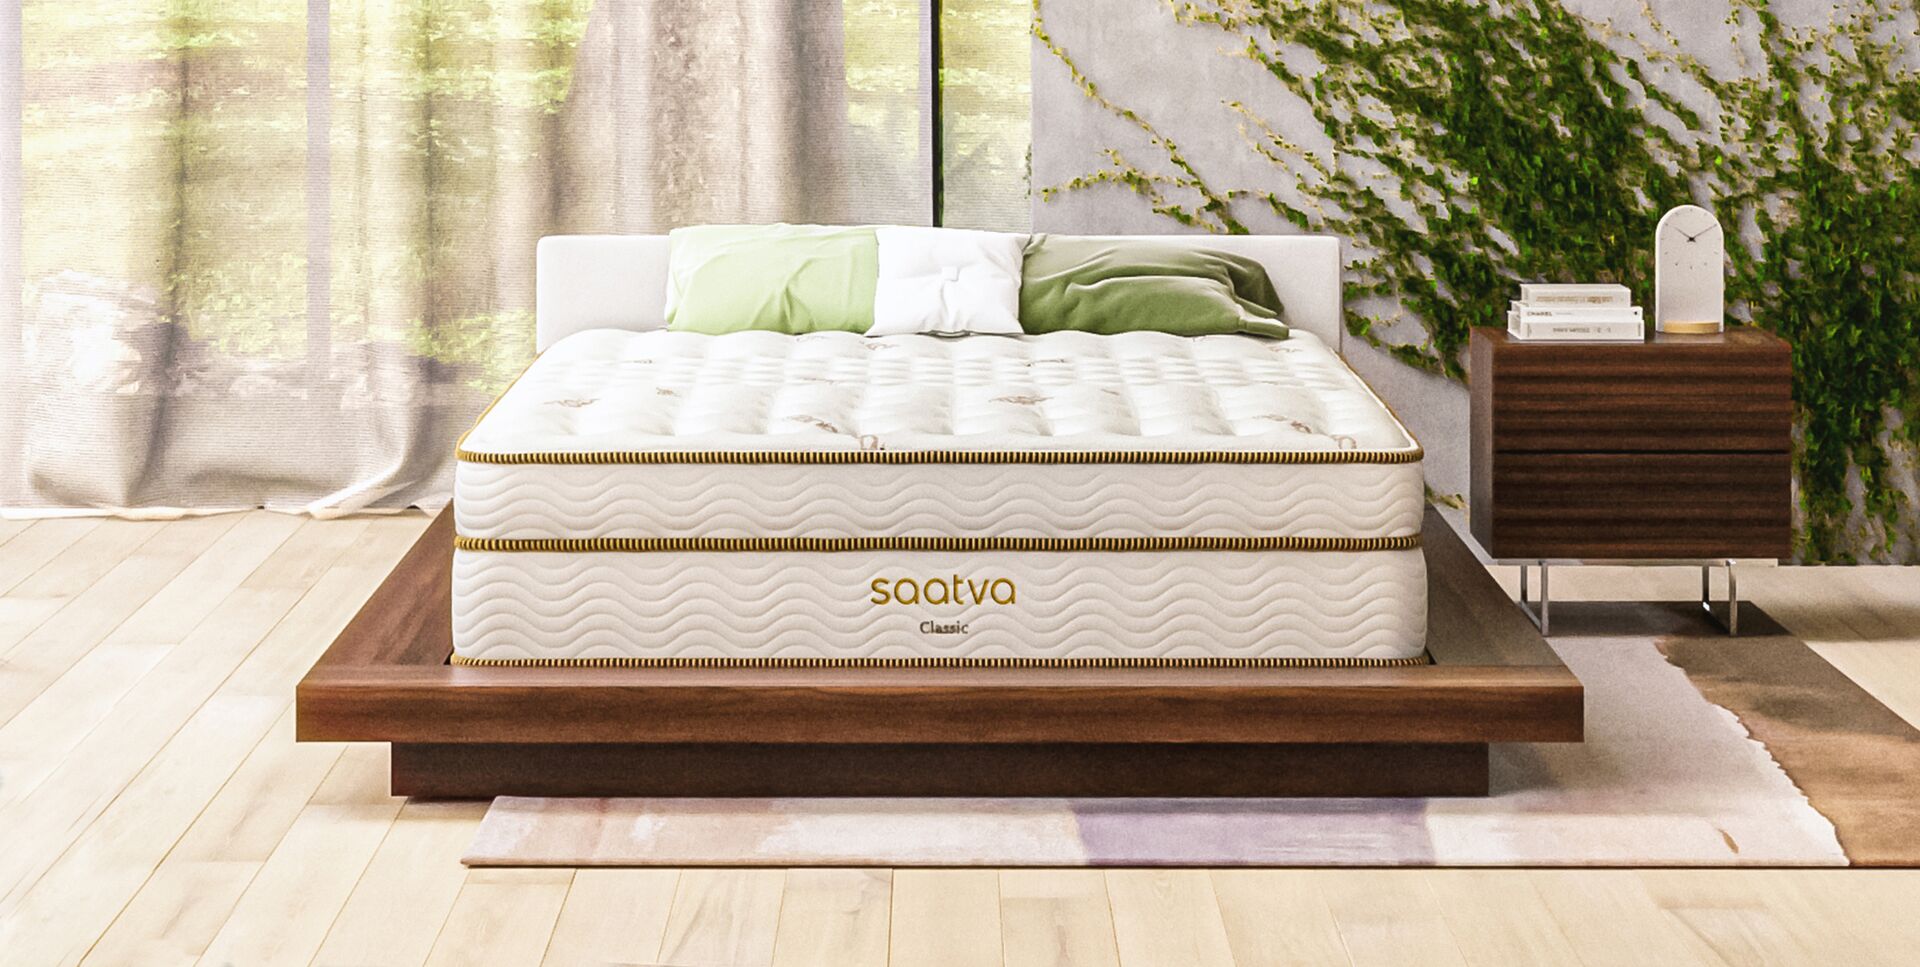 is saatva classic a medium firm mattress